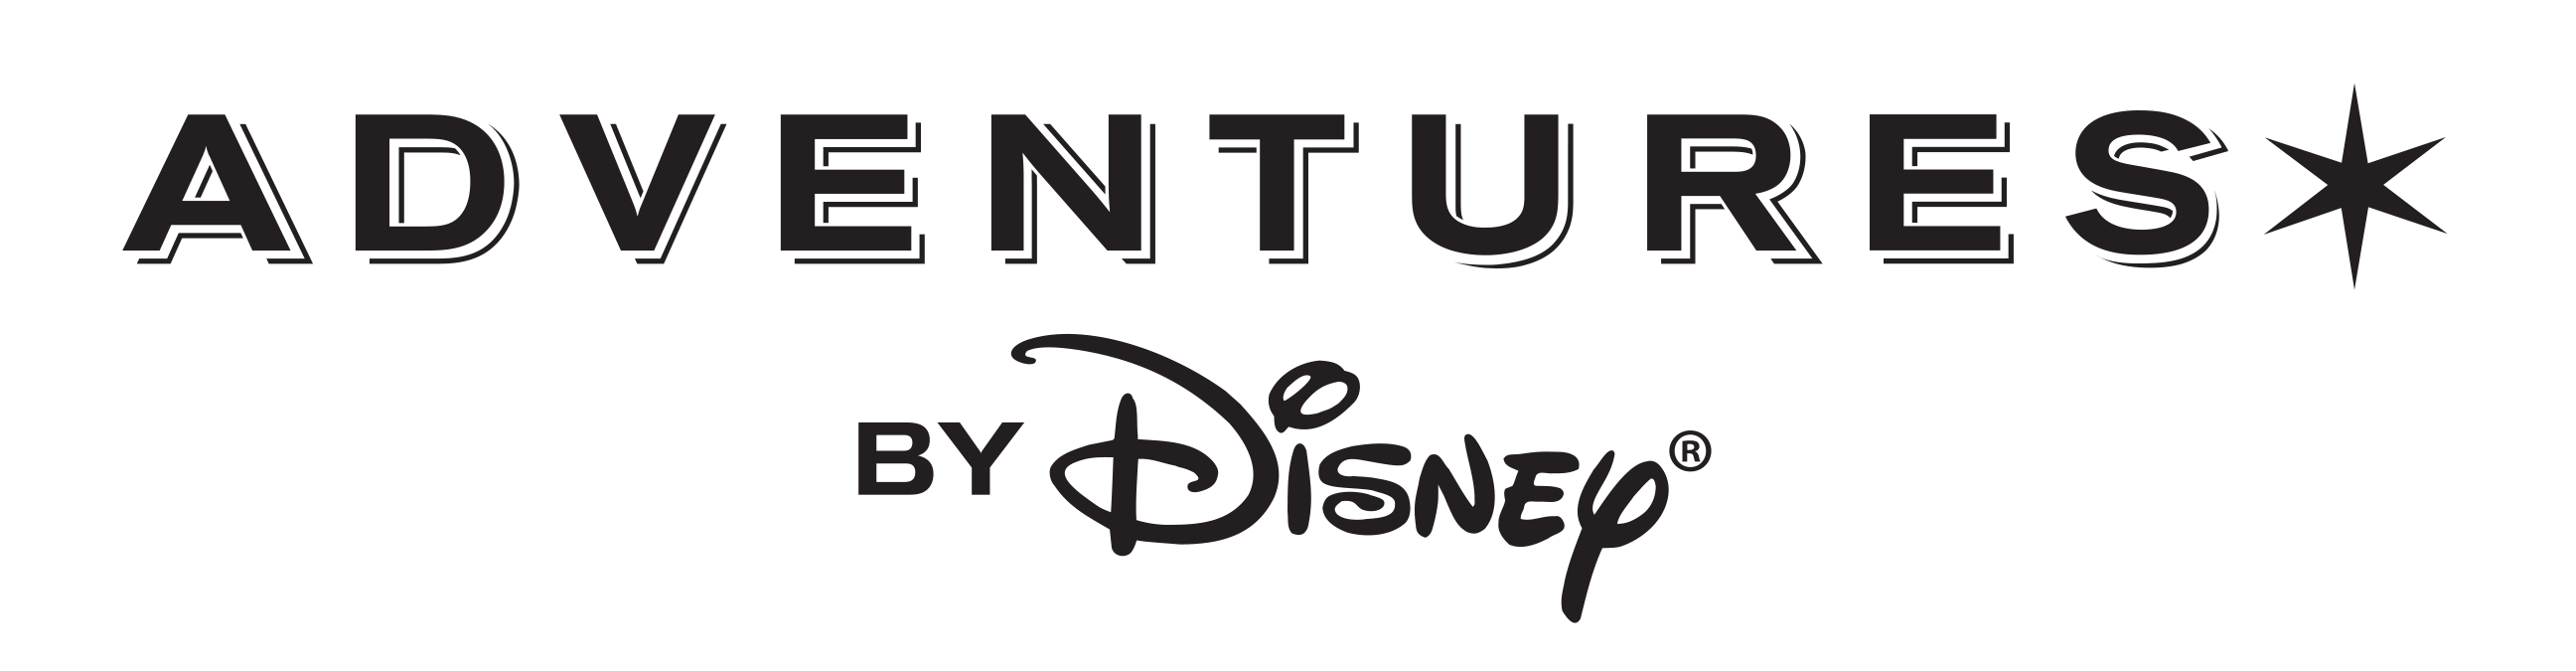 Adventures by Disney logo